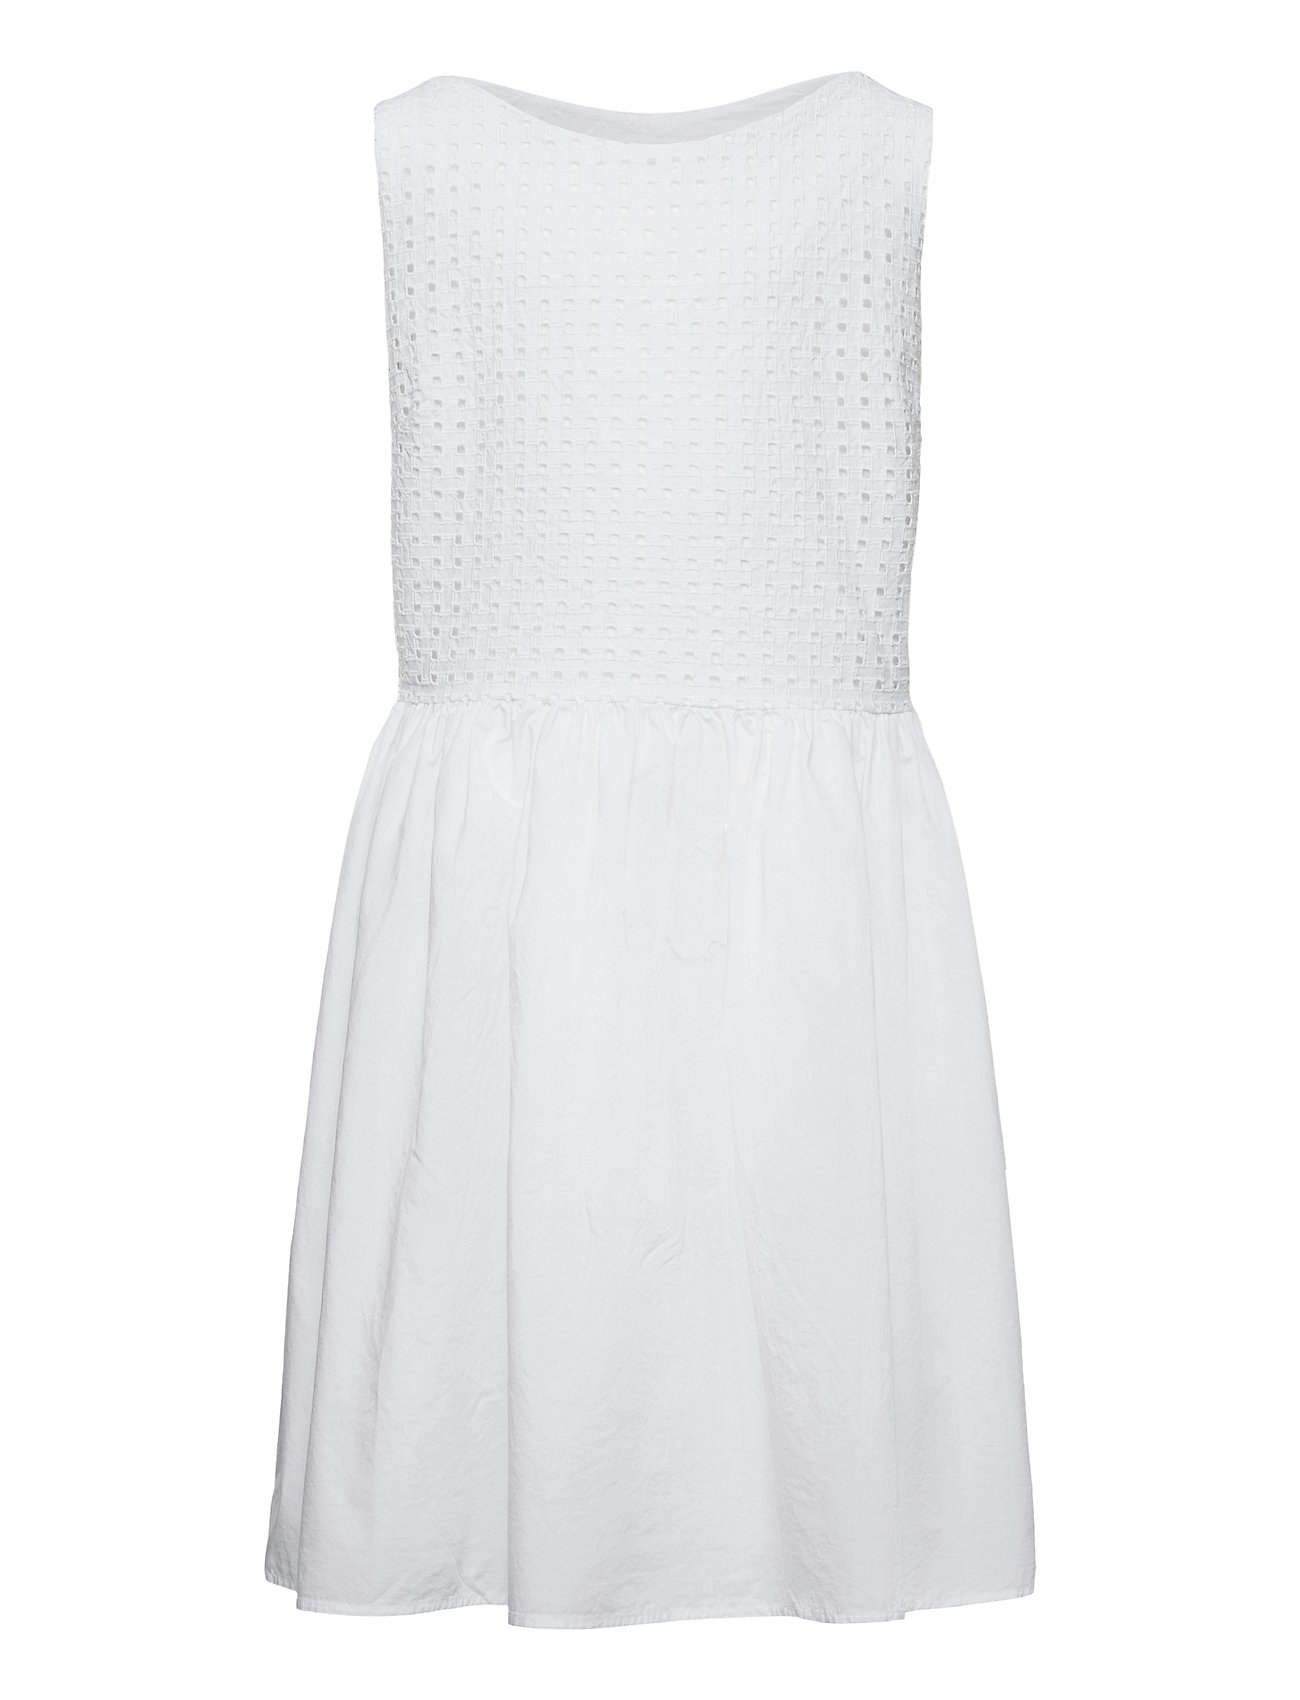 Flere Måling Stræbe Hvid GANT Tg. Broiderie Anglaise Dress Kjole Hvid GANT kjoler for børn -  Pashion.dk